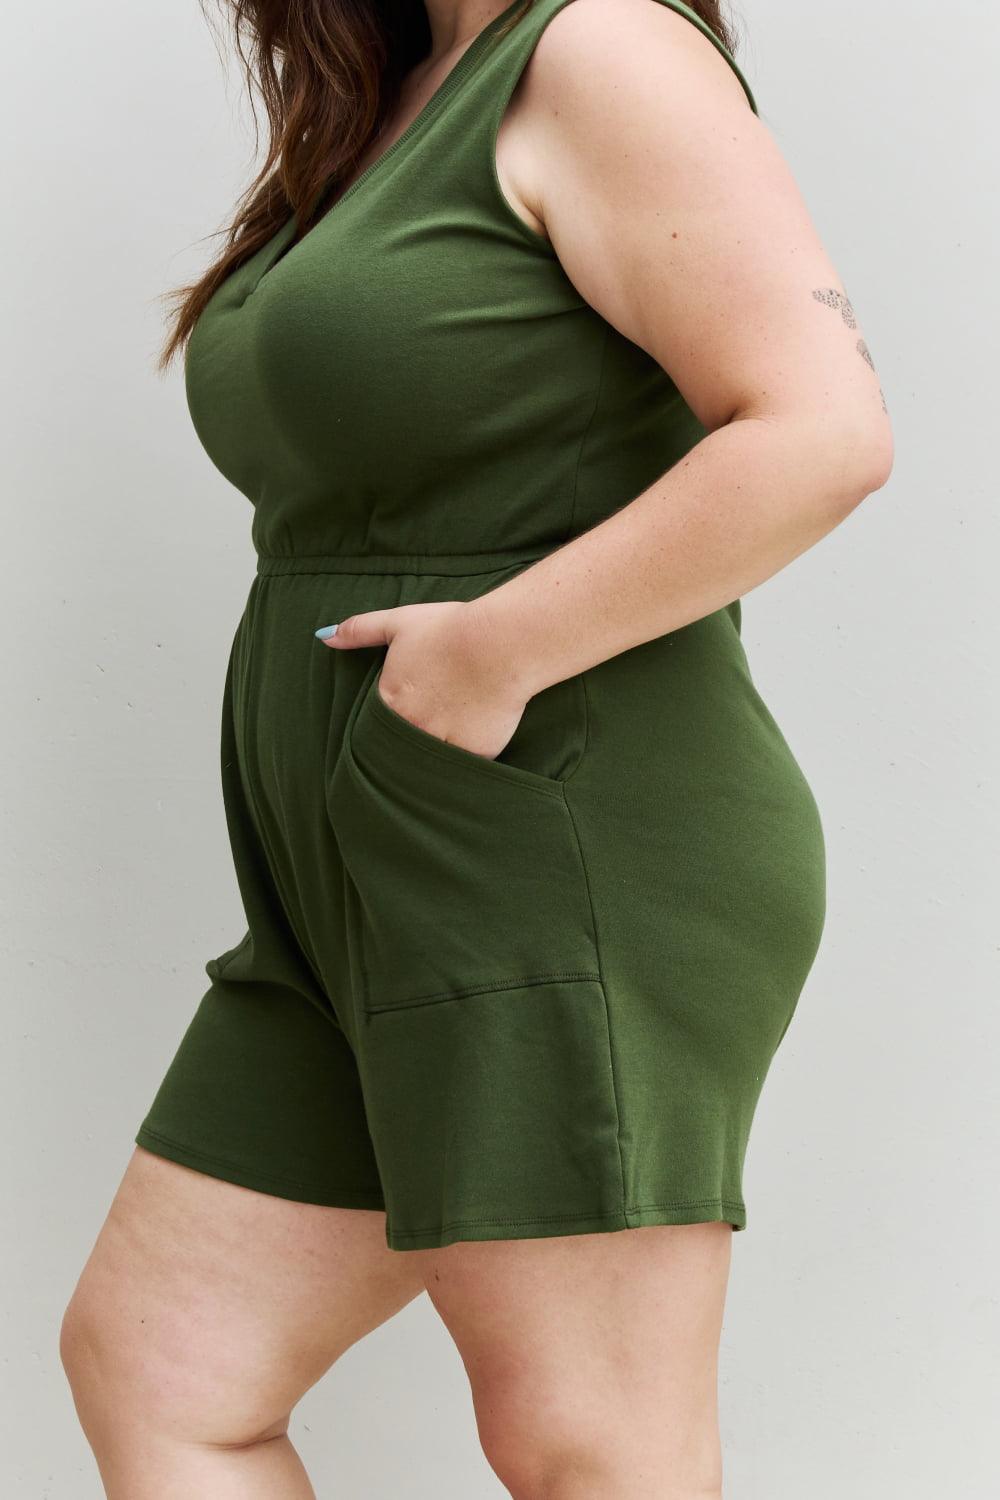 Bona Fide Fashion - Full Size V-Neck Sleeveless Romper in Army Green - Women Fashion - Bona Fide Fashion